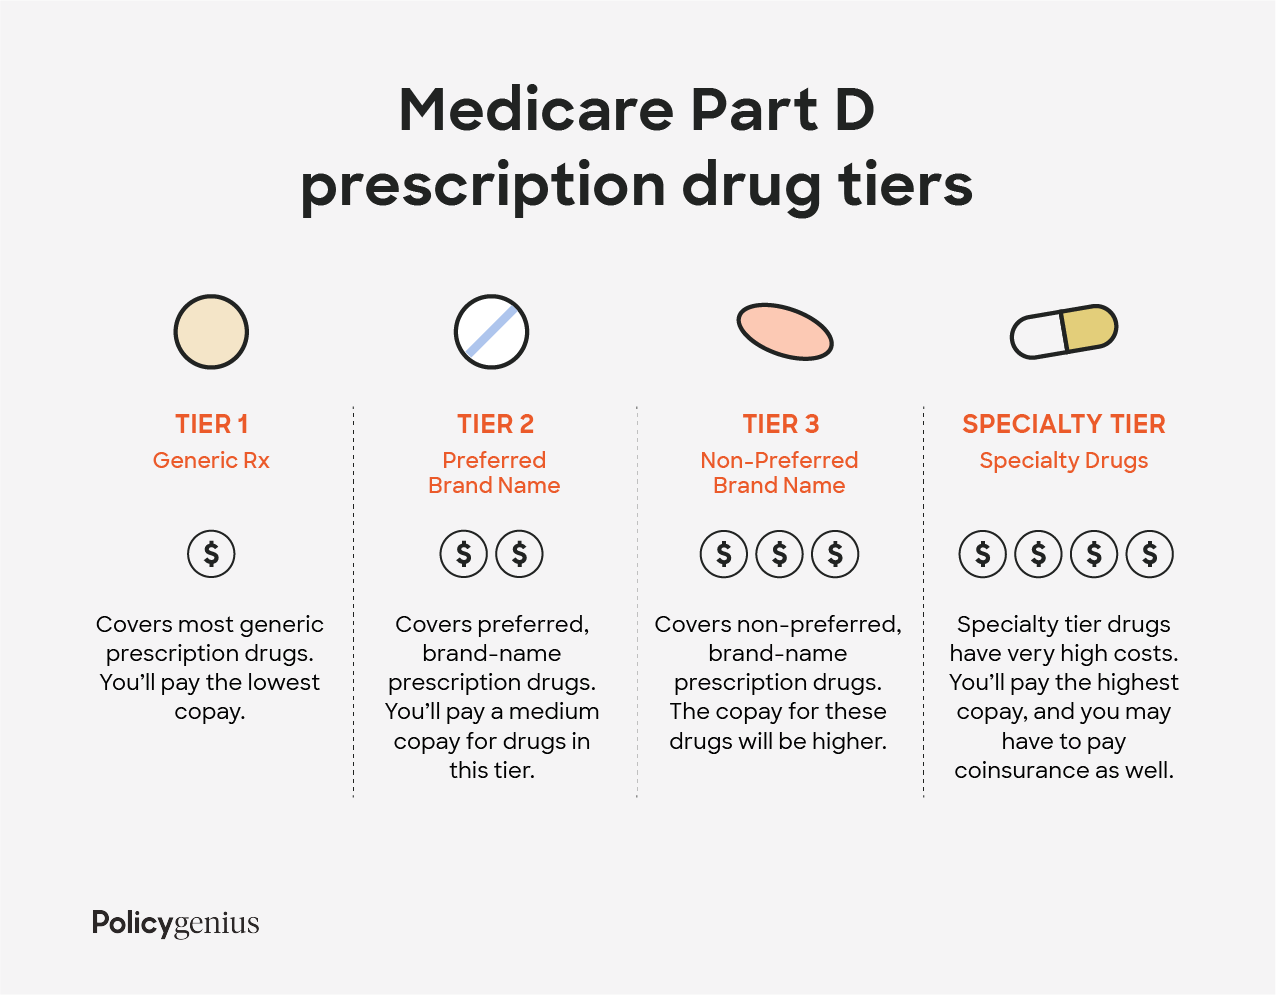 Medicare Part D Drug Tiers